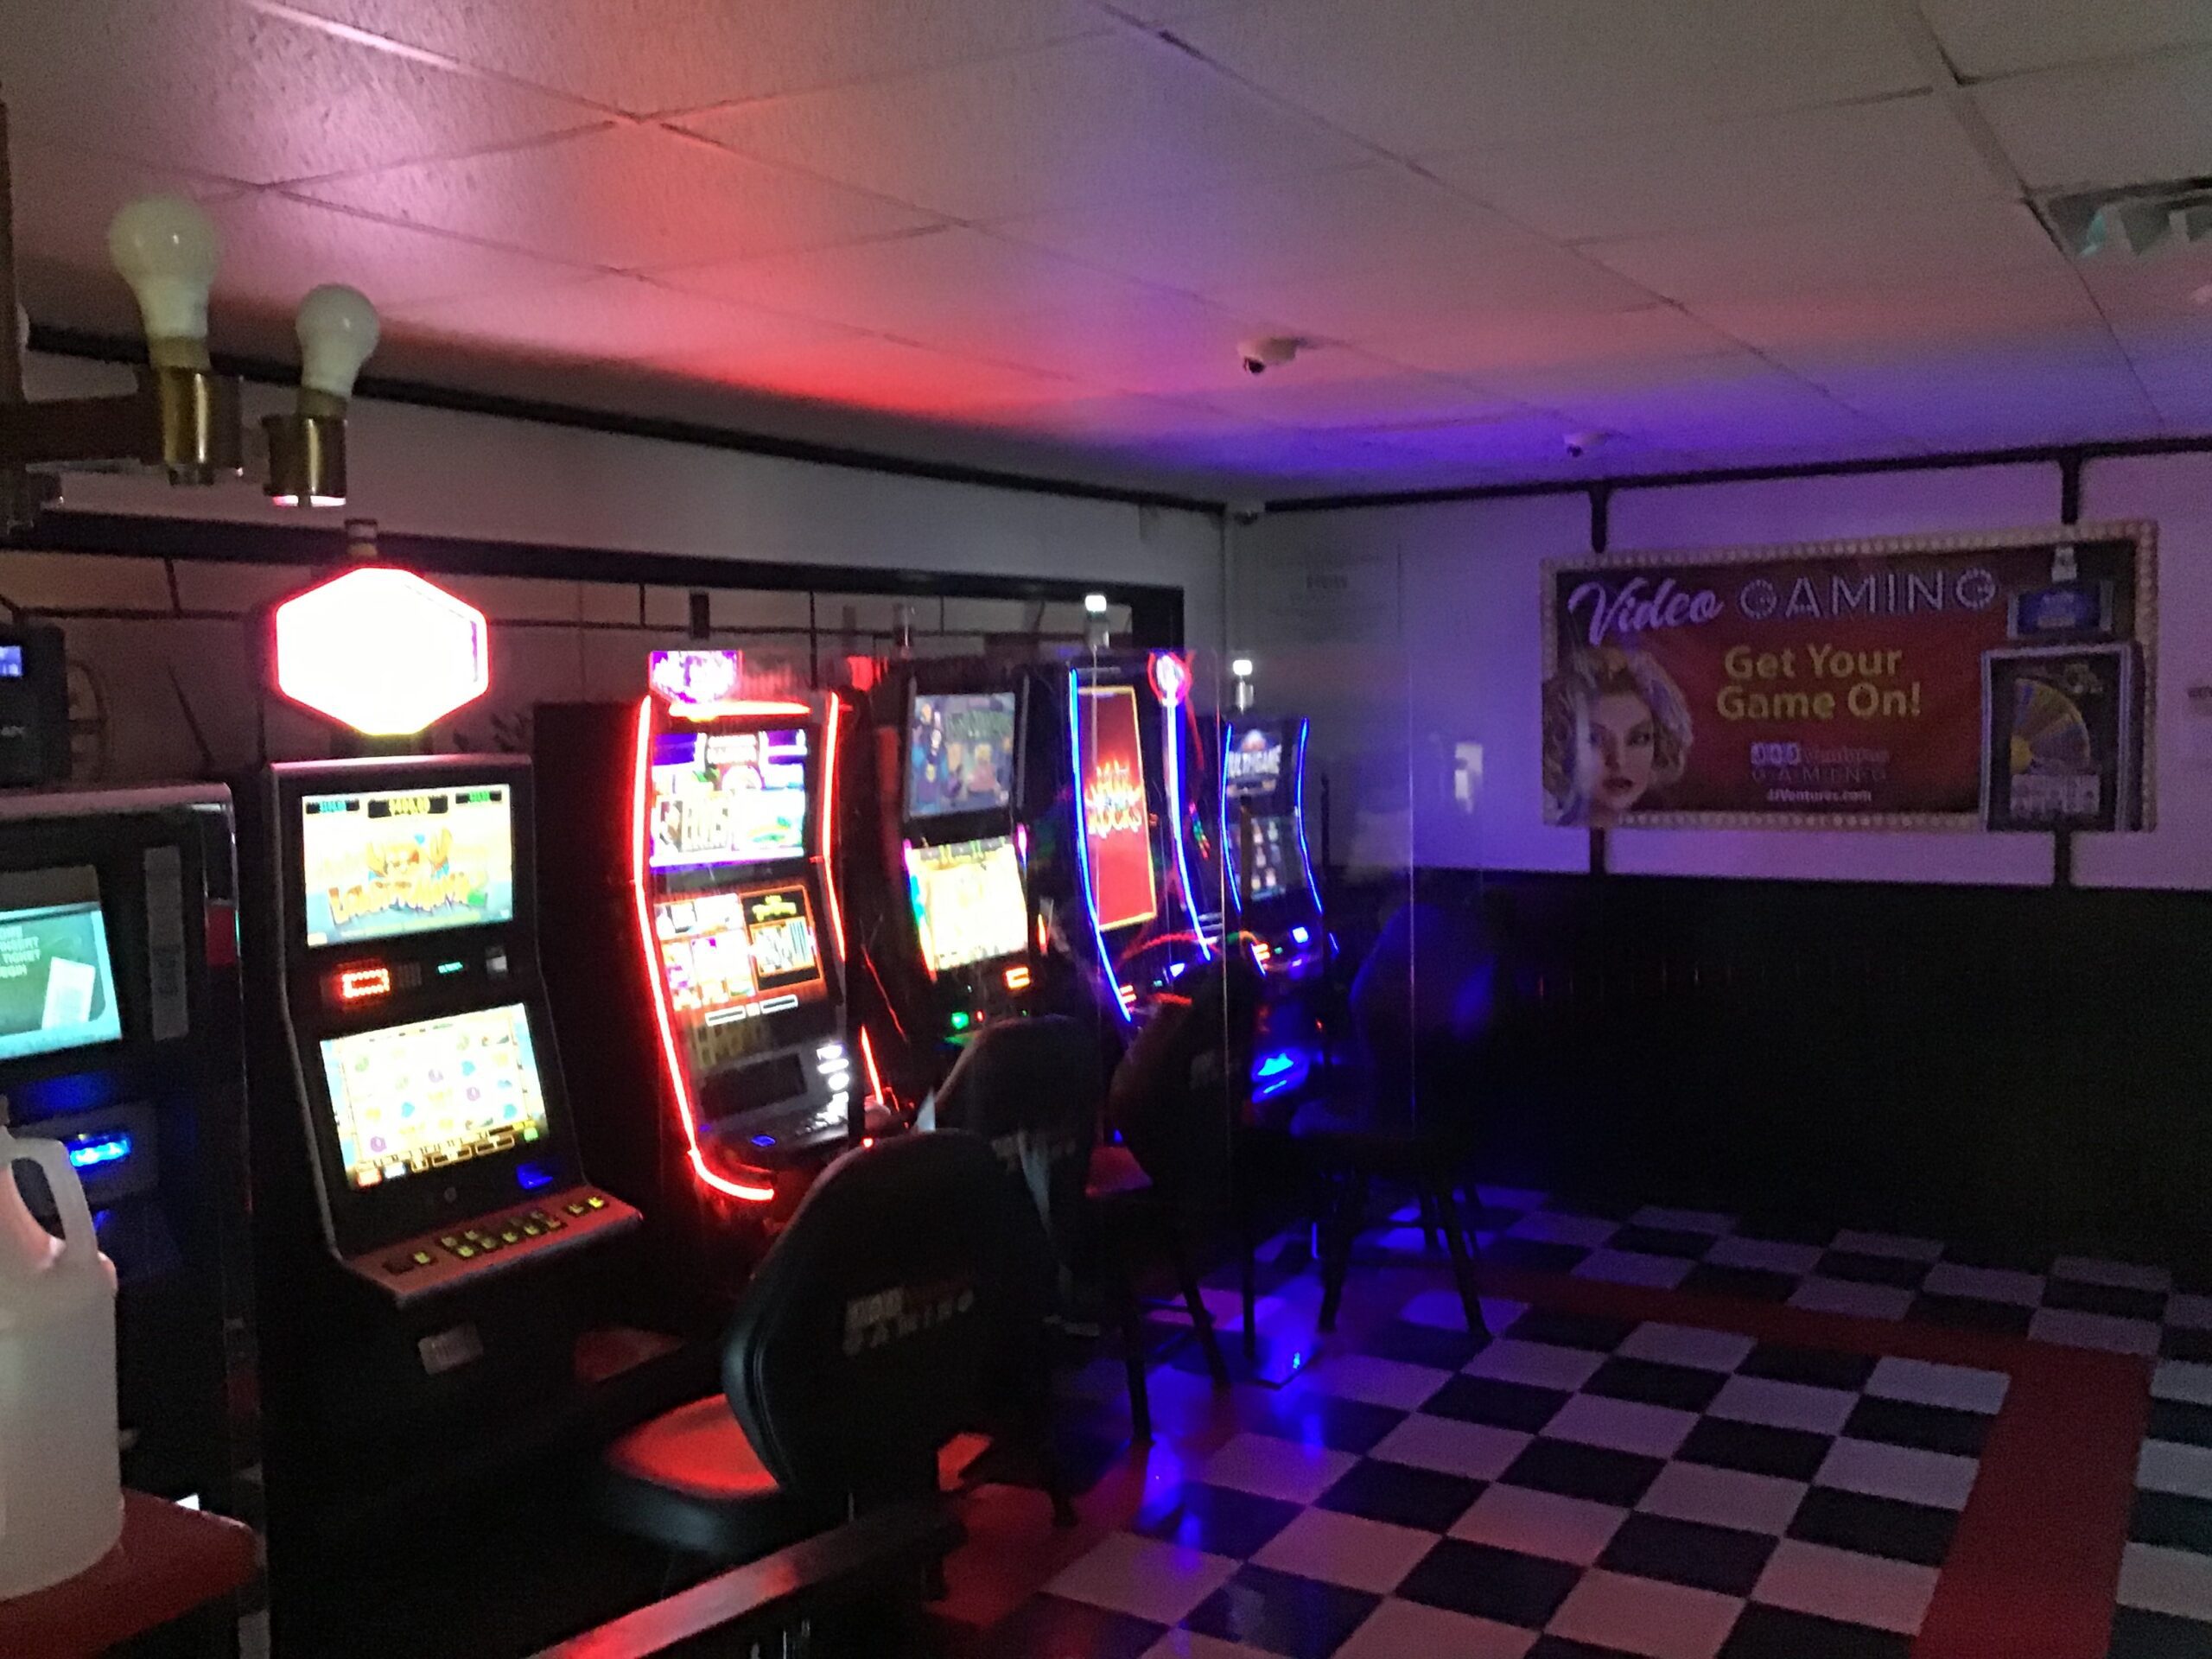 Video Gaming in Sandoval, IL